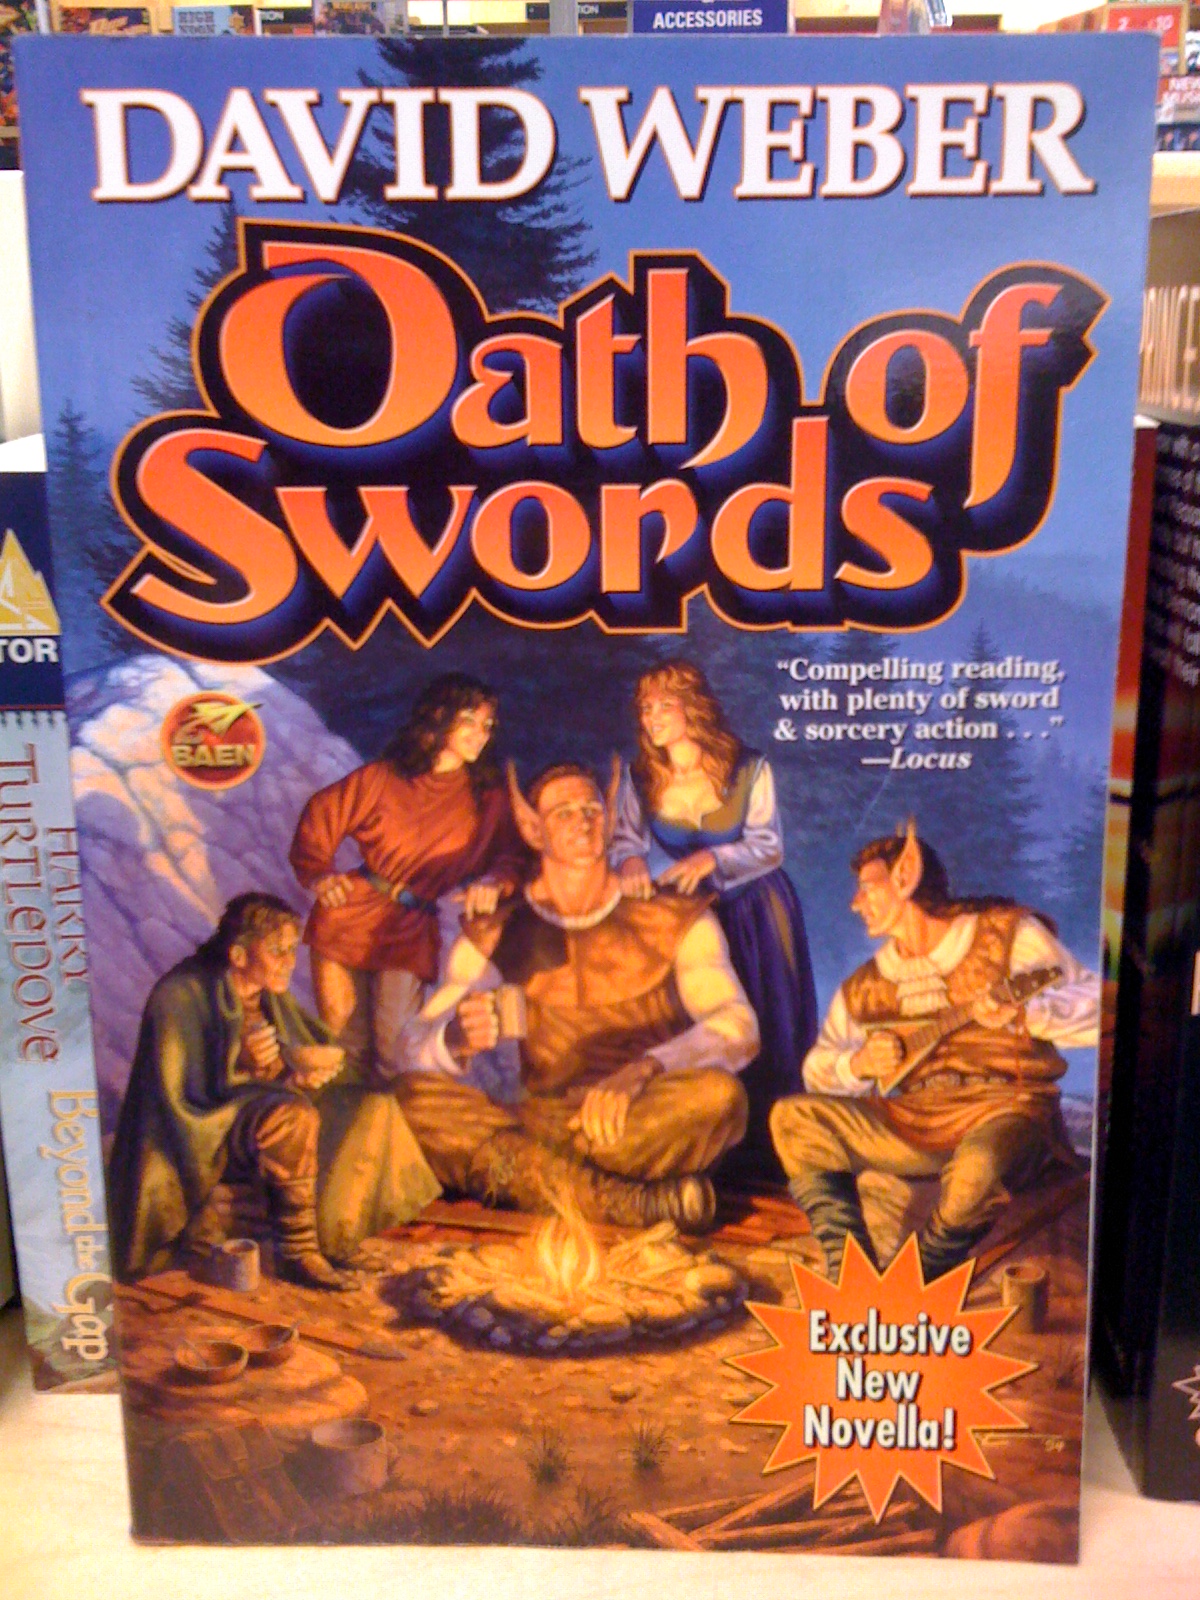 oath of swords - afterdark